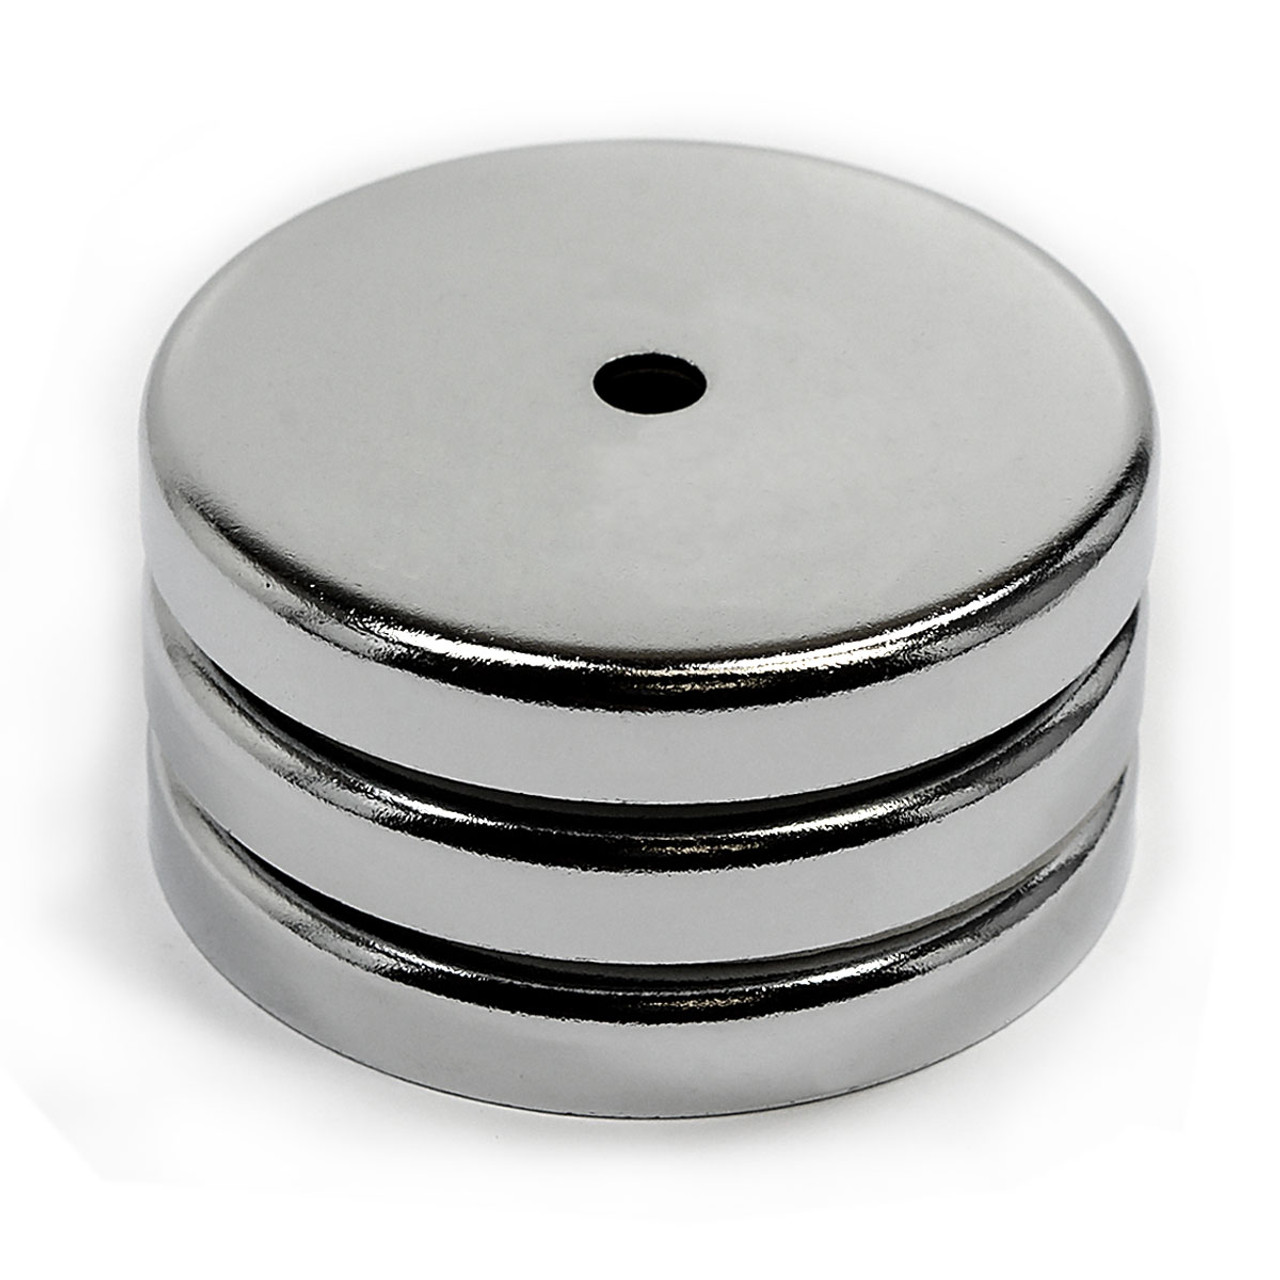  Magnet Ceramic Magnets 100 Pcs Strong Magnets for